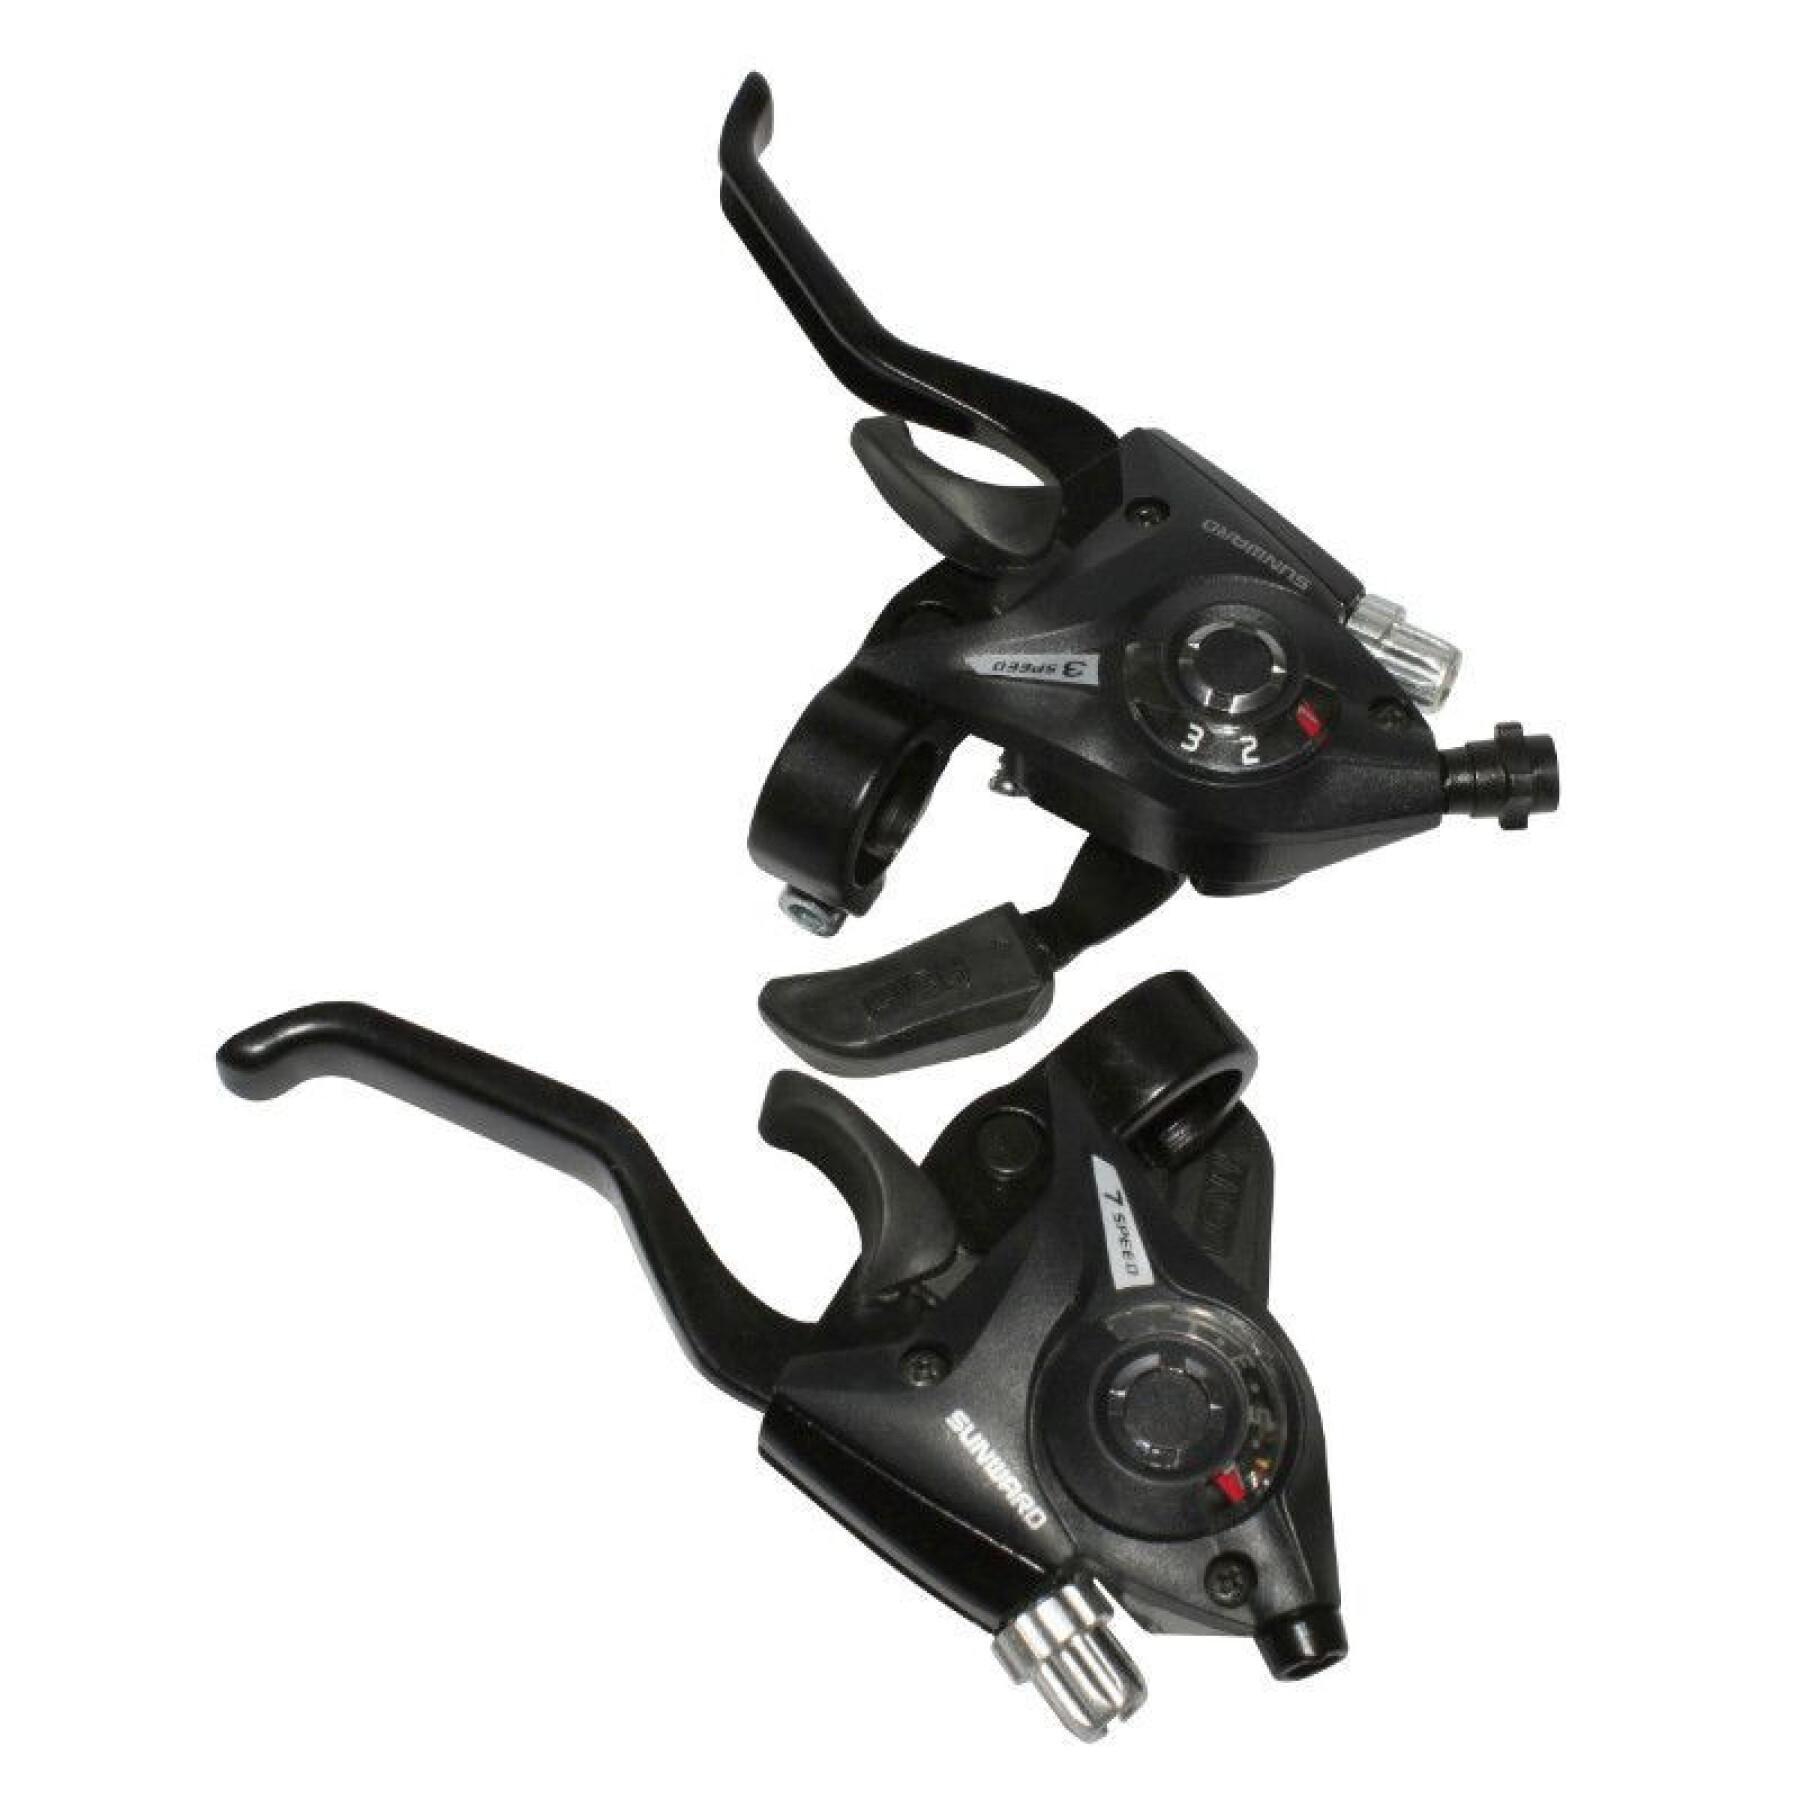 Pair of aluminum shifters for shimano compatible brakes P2R V-Brake